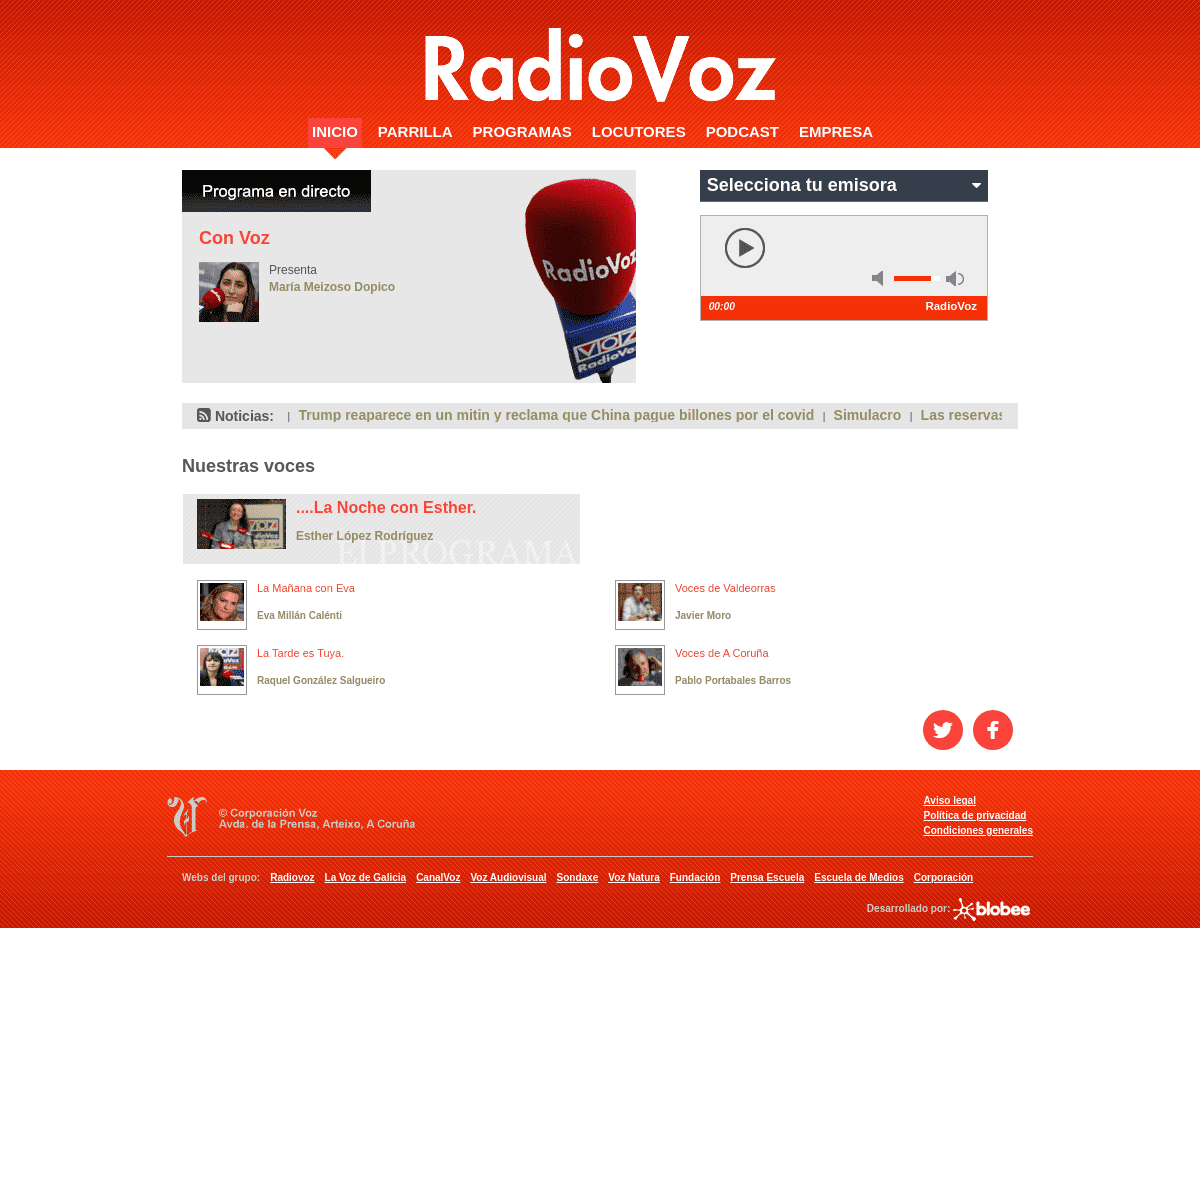 A complete backup of https://radiovoz.com